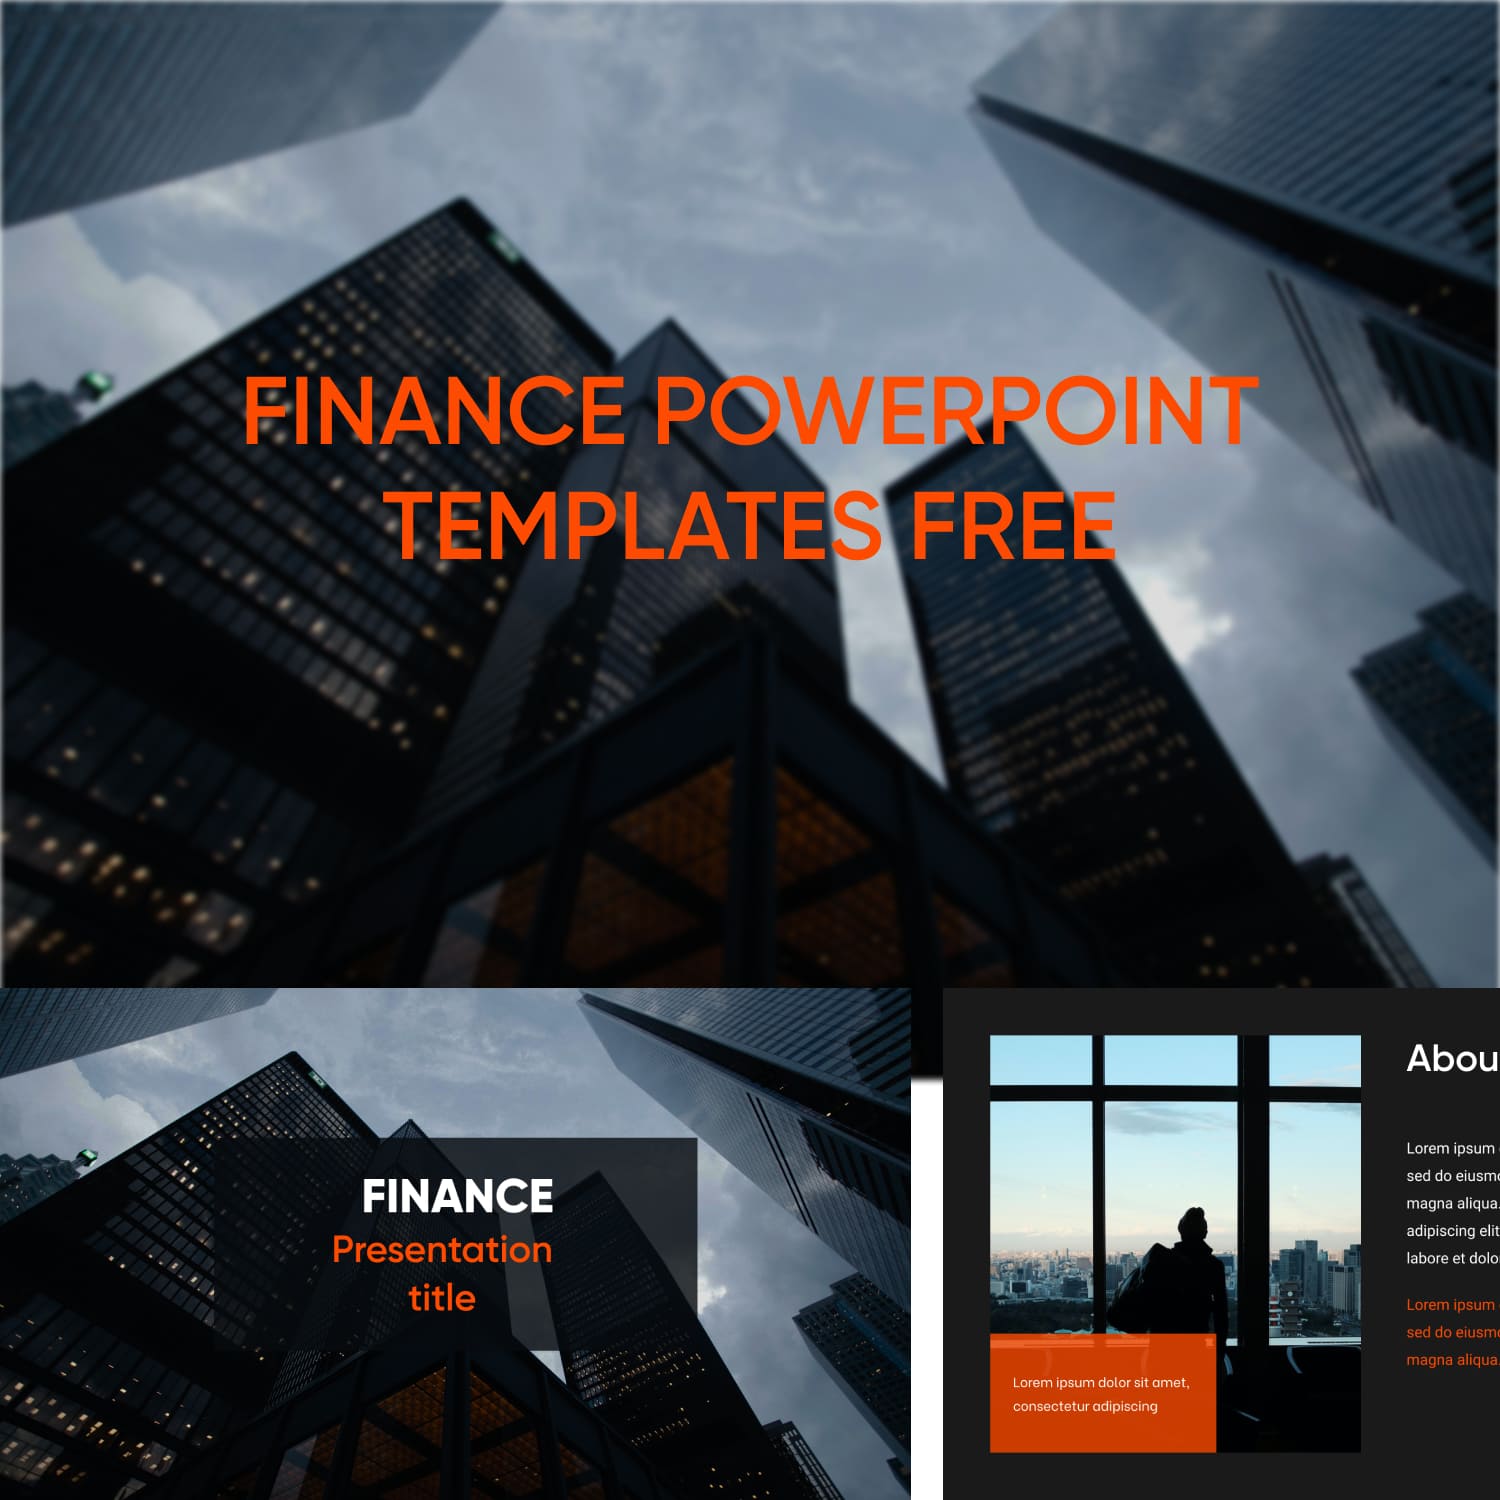 Finance Powerpoint Templates Free 1500x1500 1.